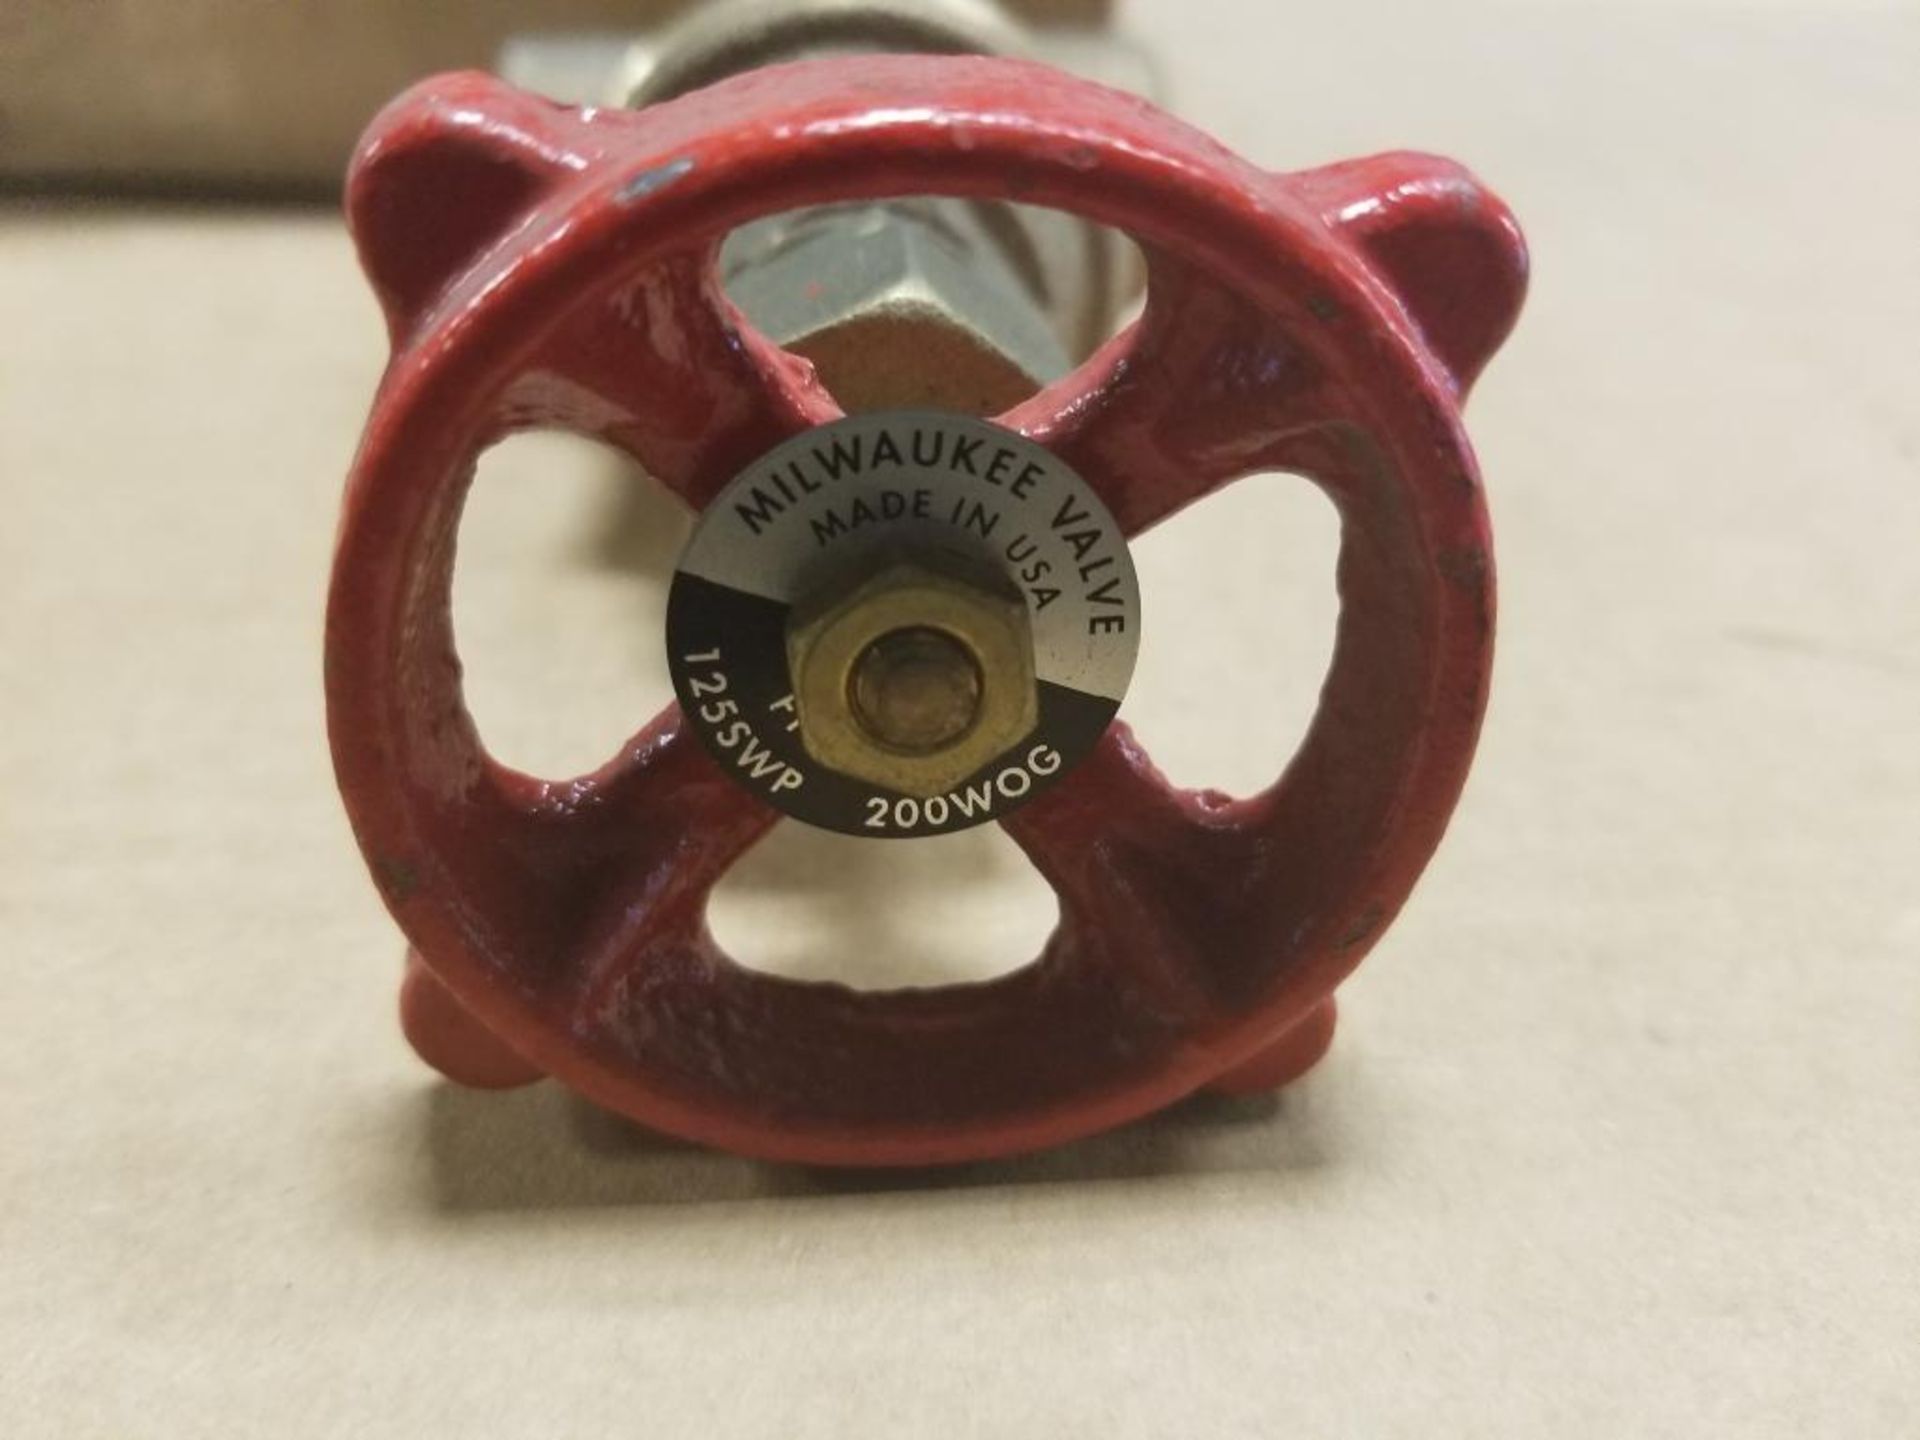 Qty 22 - Milwaukee brass valves. - Image 3 of 4